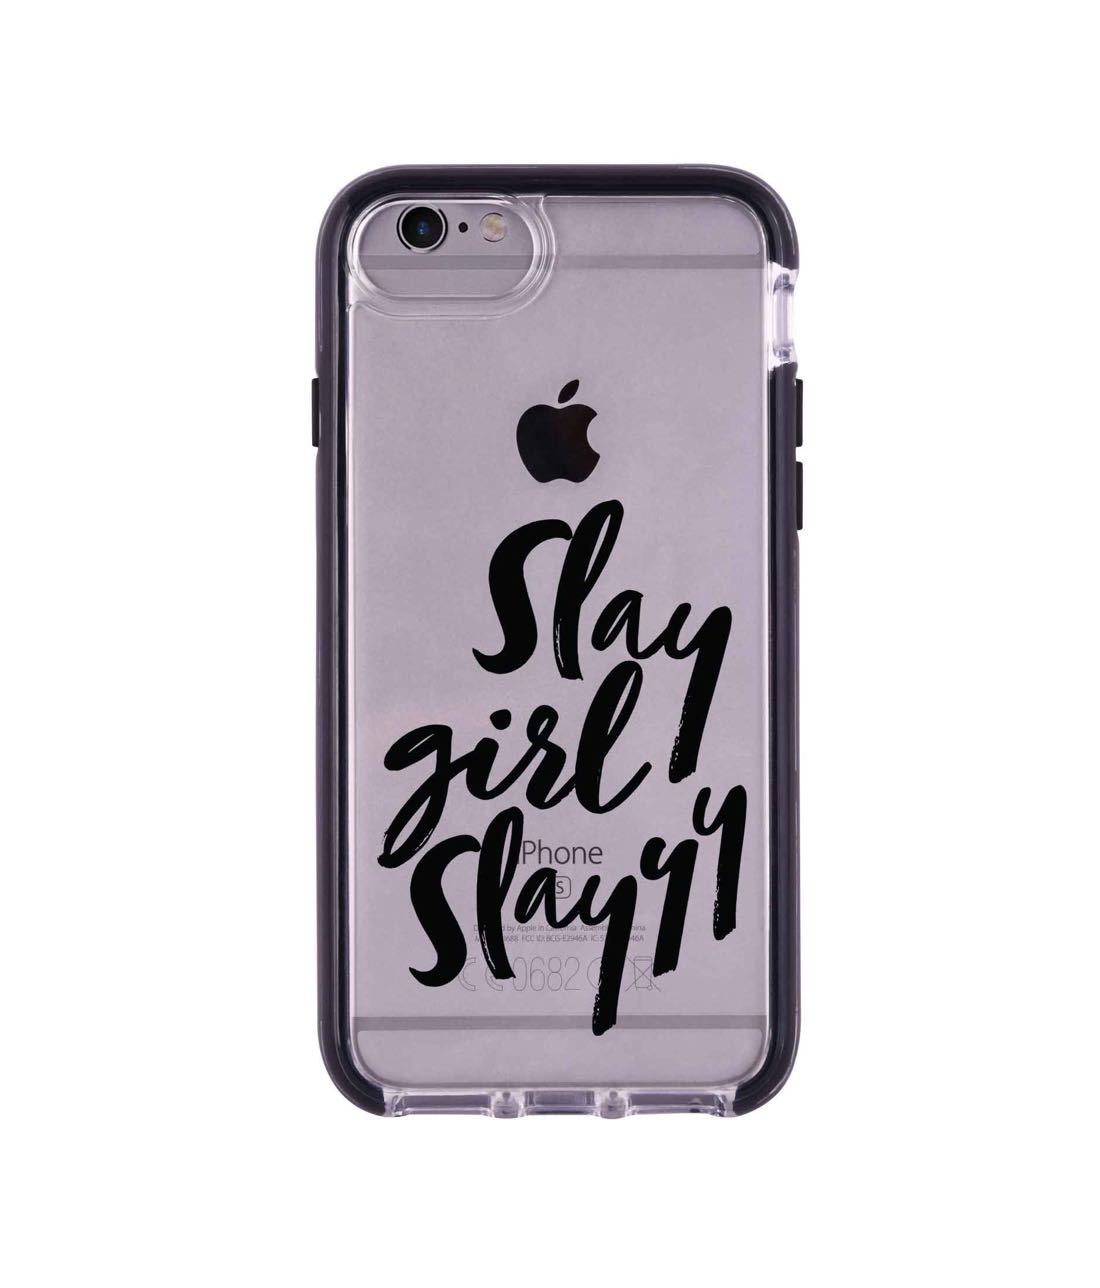 Slay girl Slay - Extreme Phone Case for iPhone 6 Plus